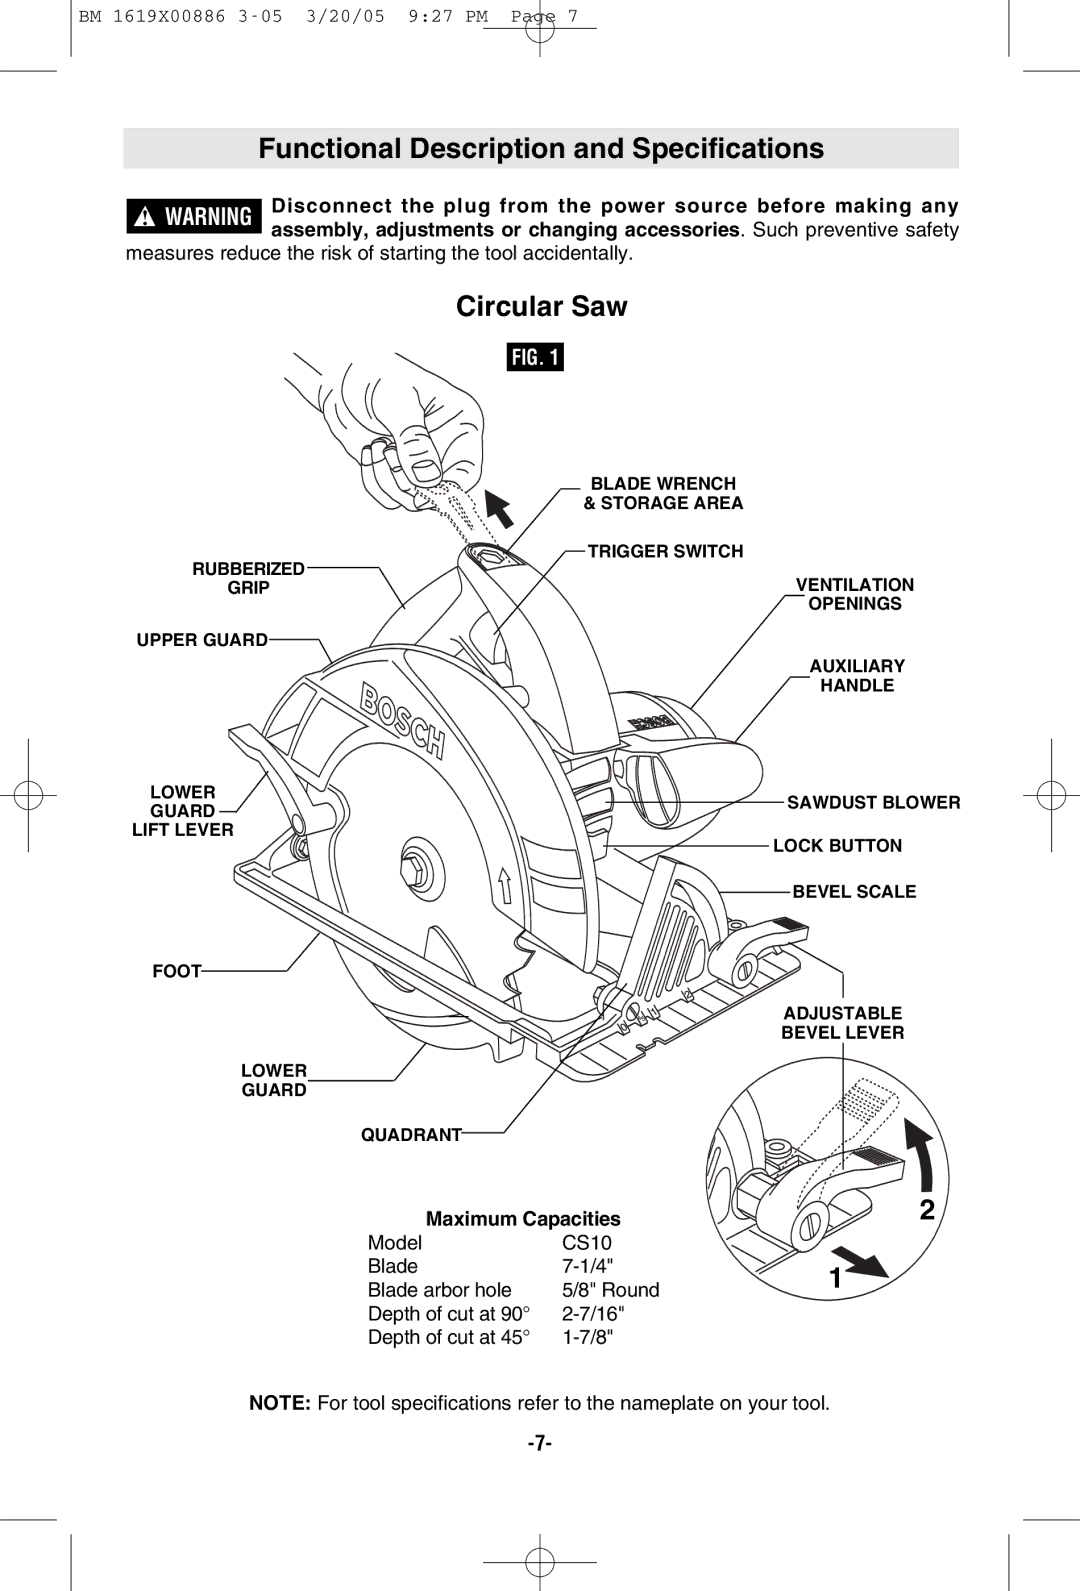 Bosch Power Tools CS10 manual Functional Description and Specifications, Circular Saw, Maximum Capacities 